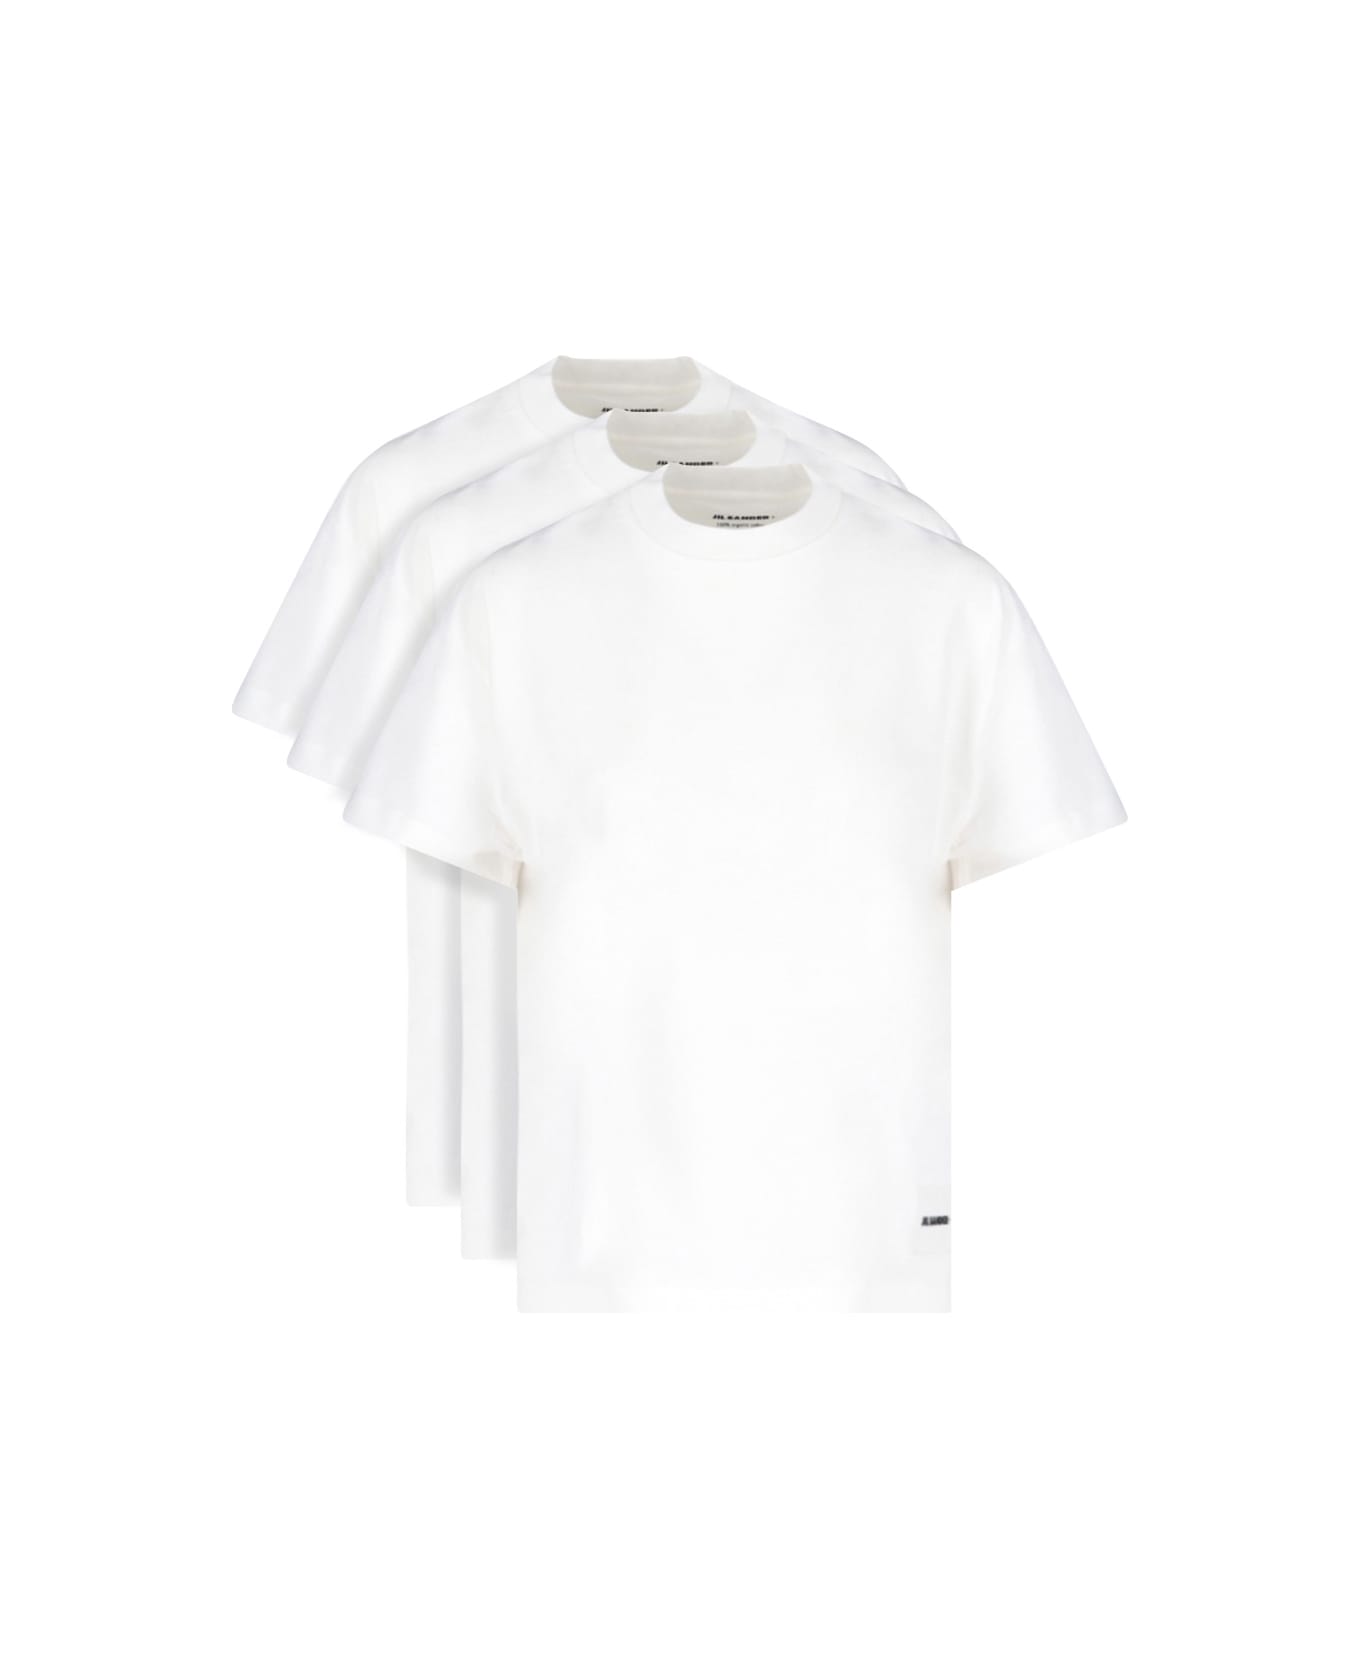 Jil Sander Logo T-shirt Set - White Tシャツ